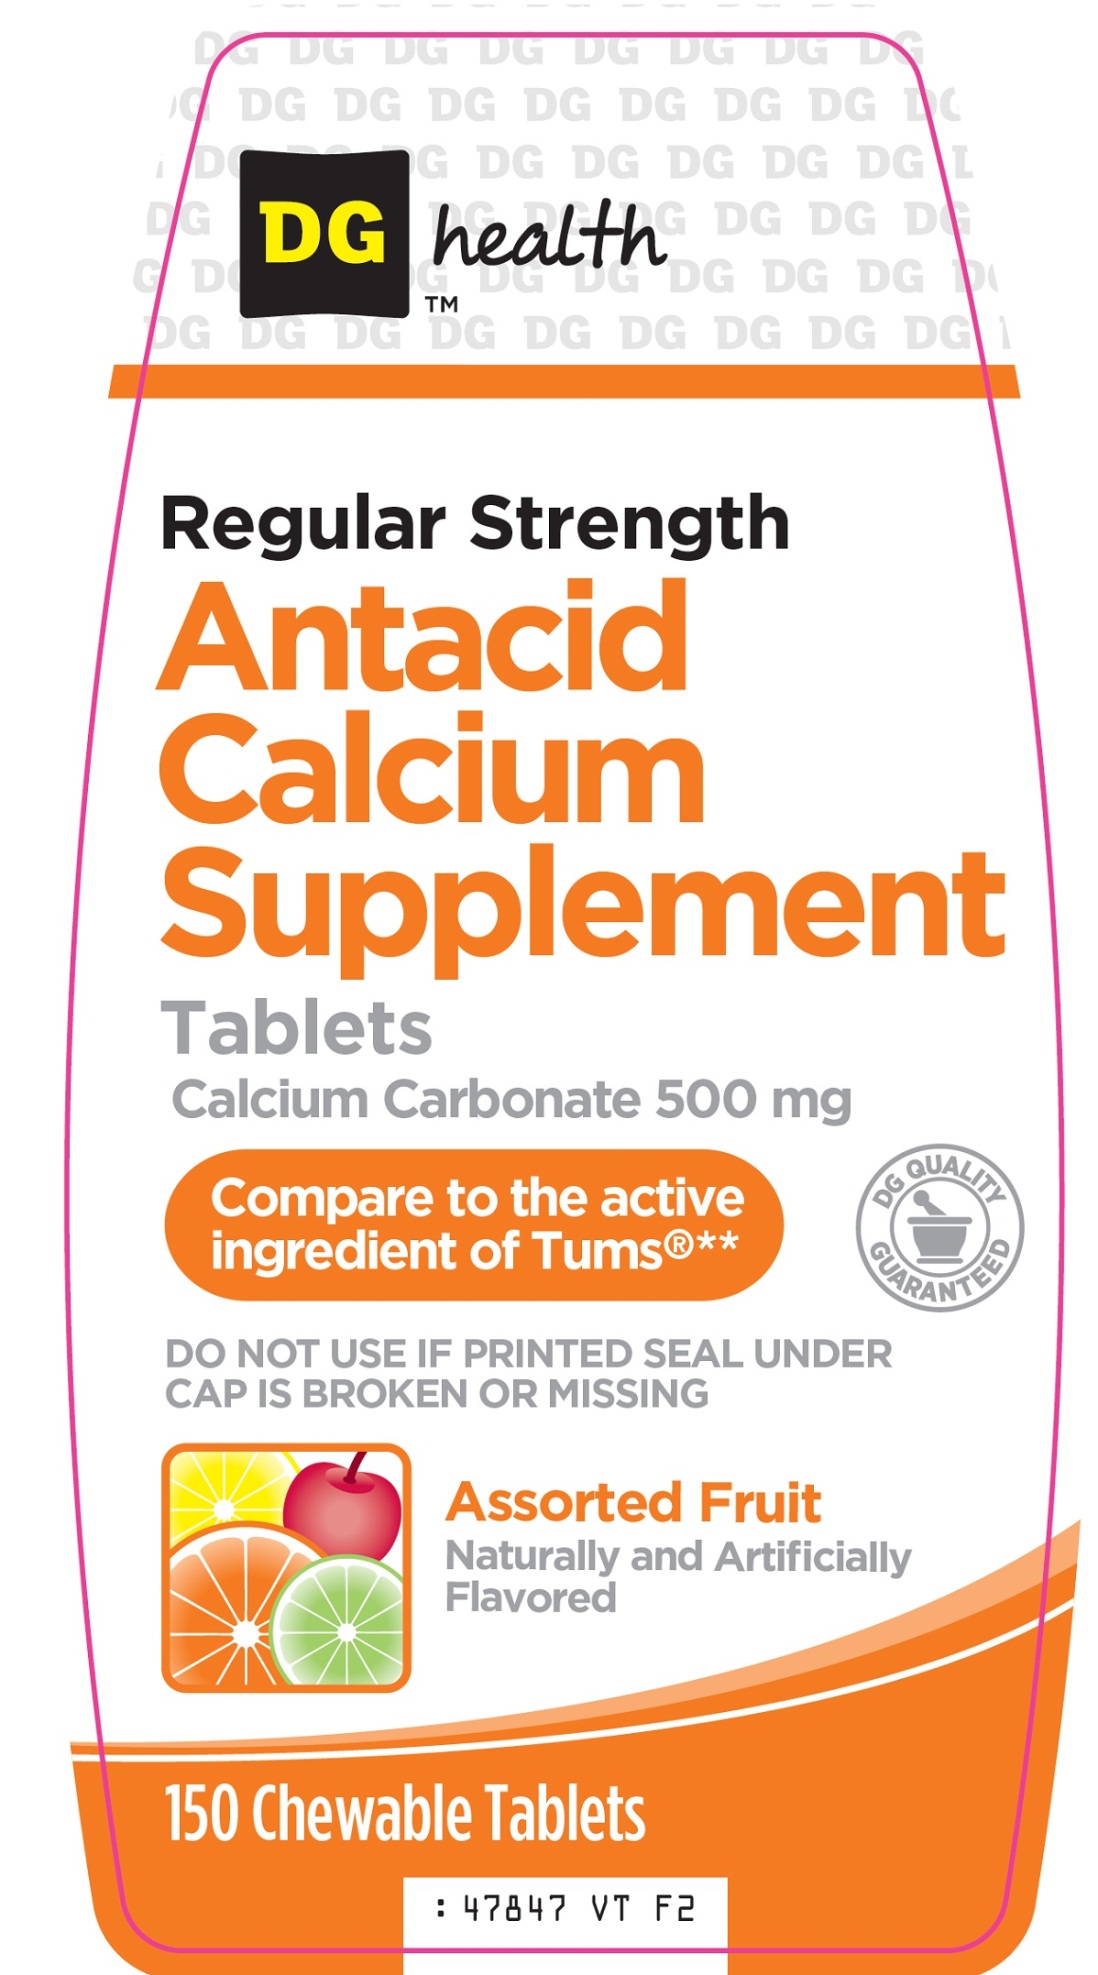 Antacid Calcium Supplement Front Label Image